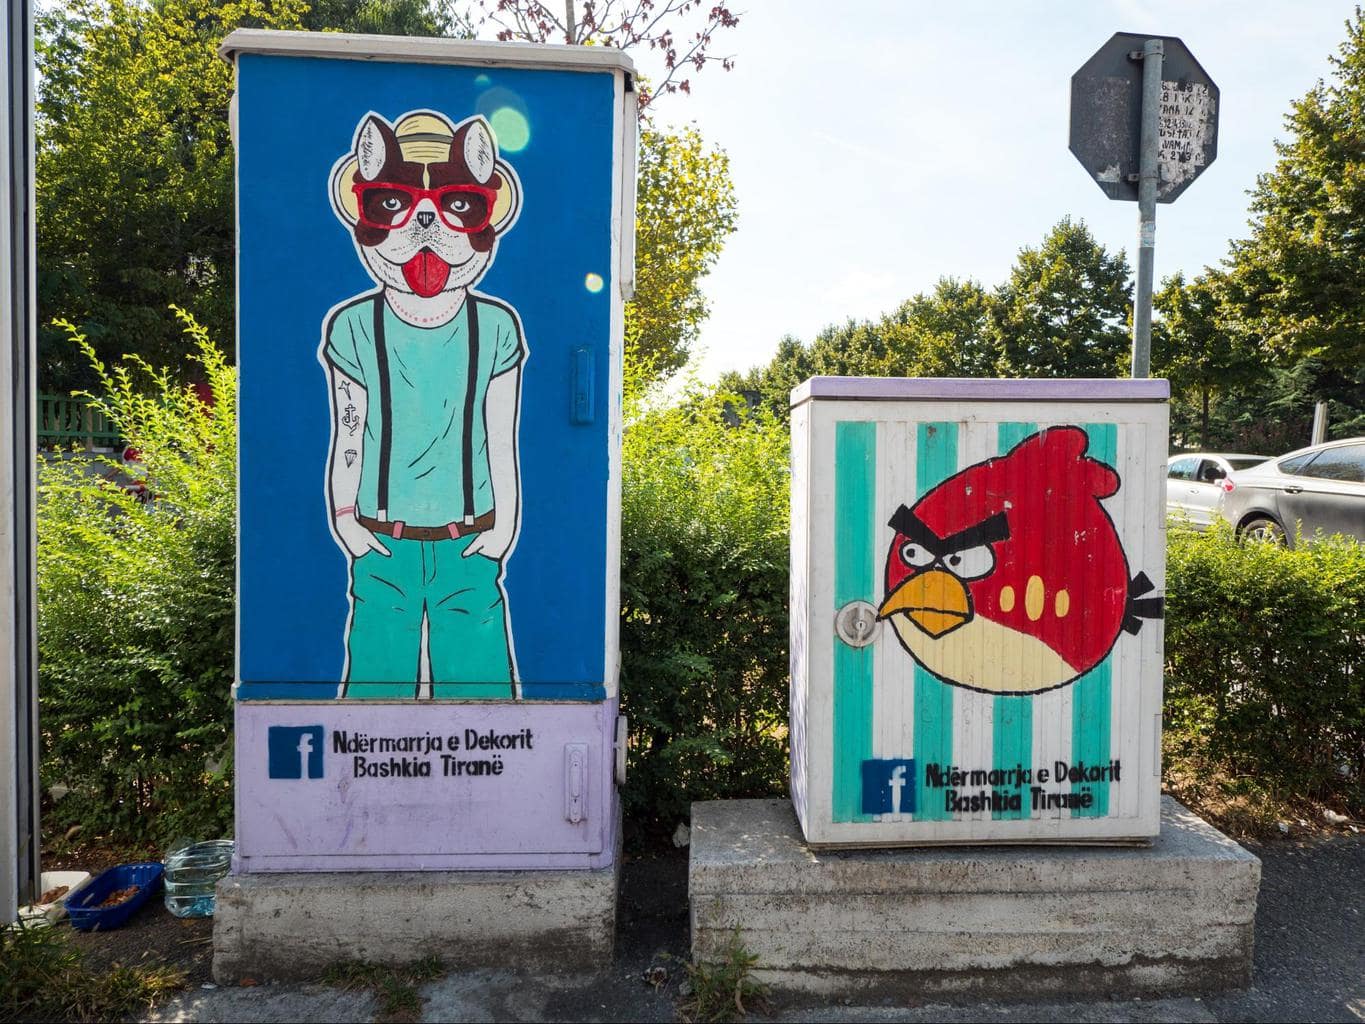 Electric box street art in Tirana